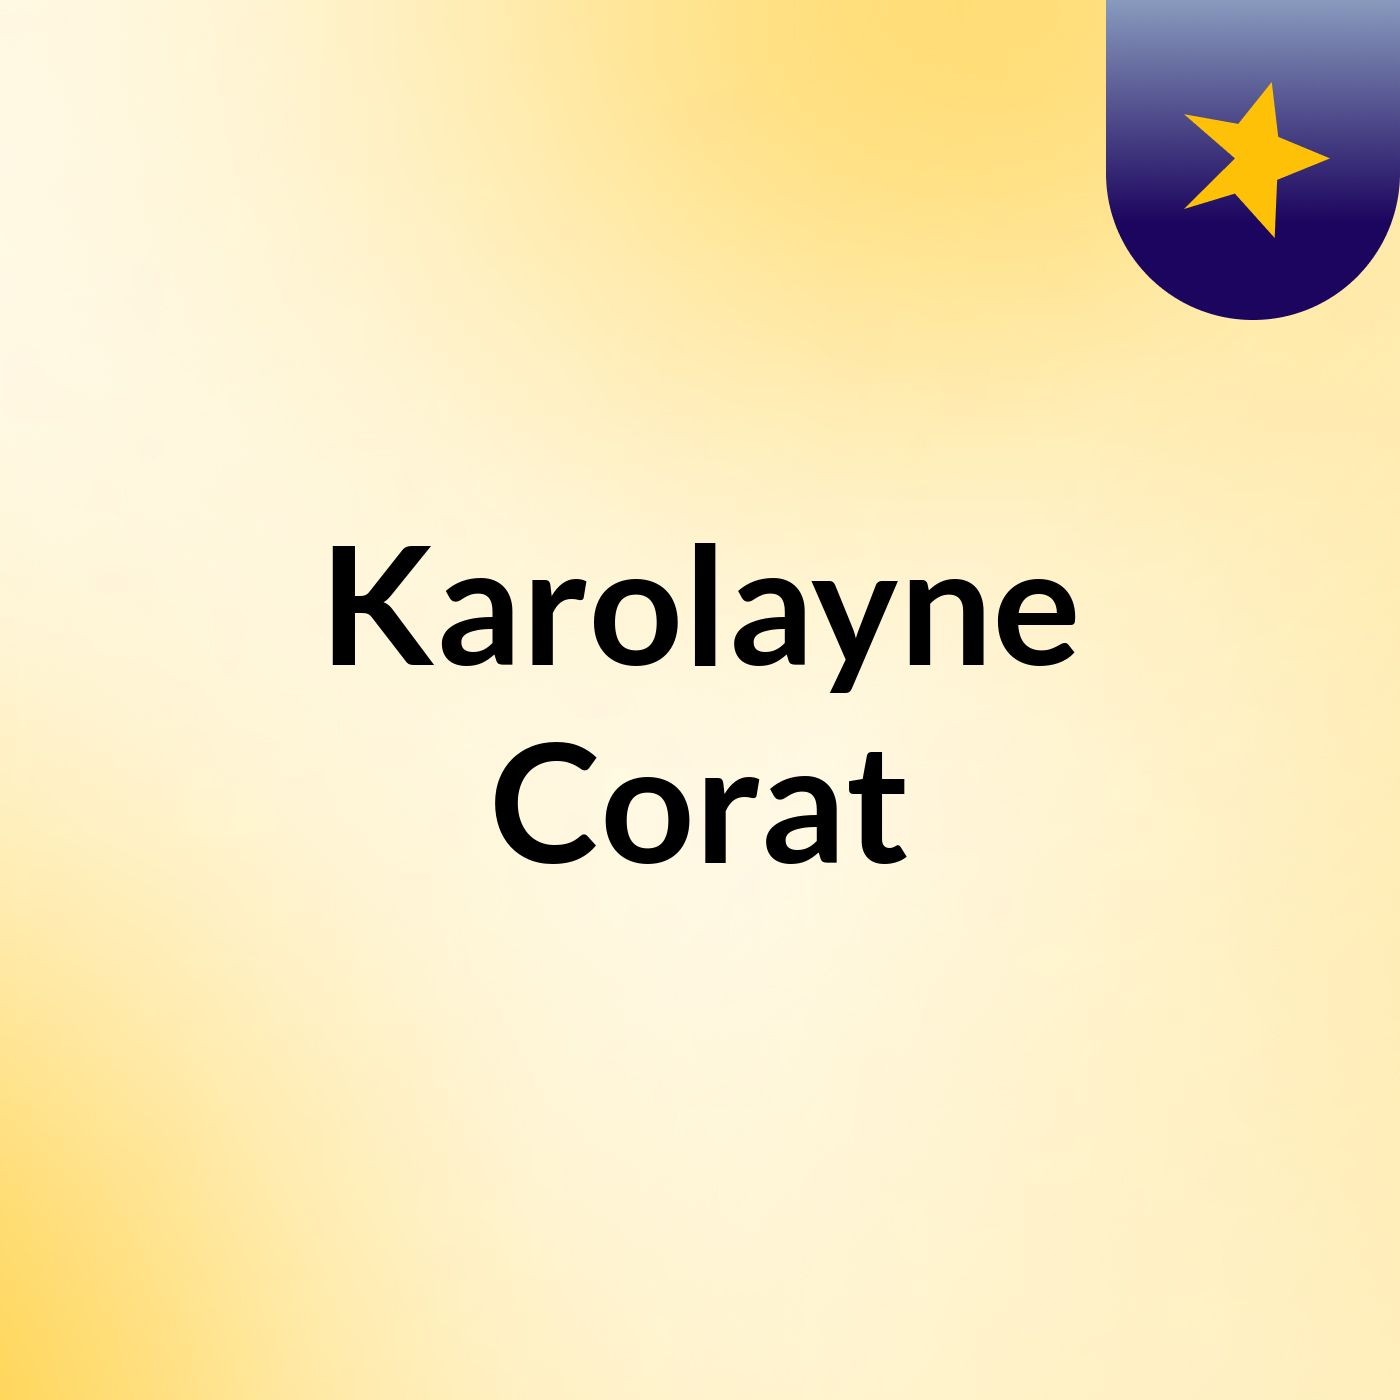 Karolayne Corat